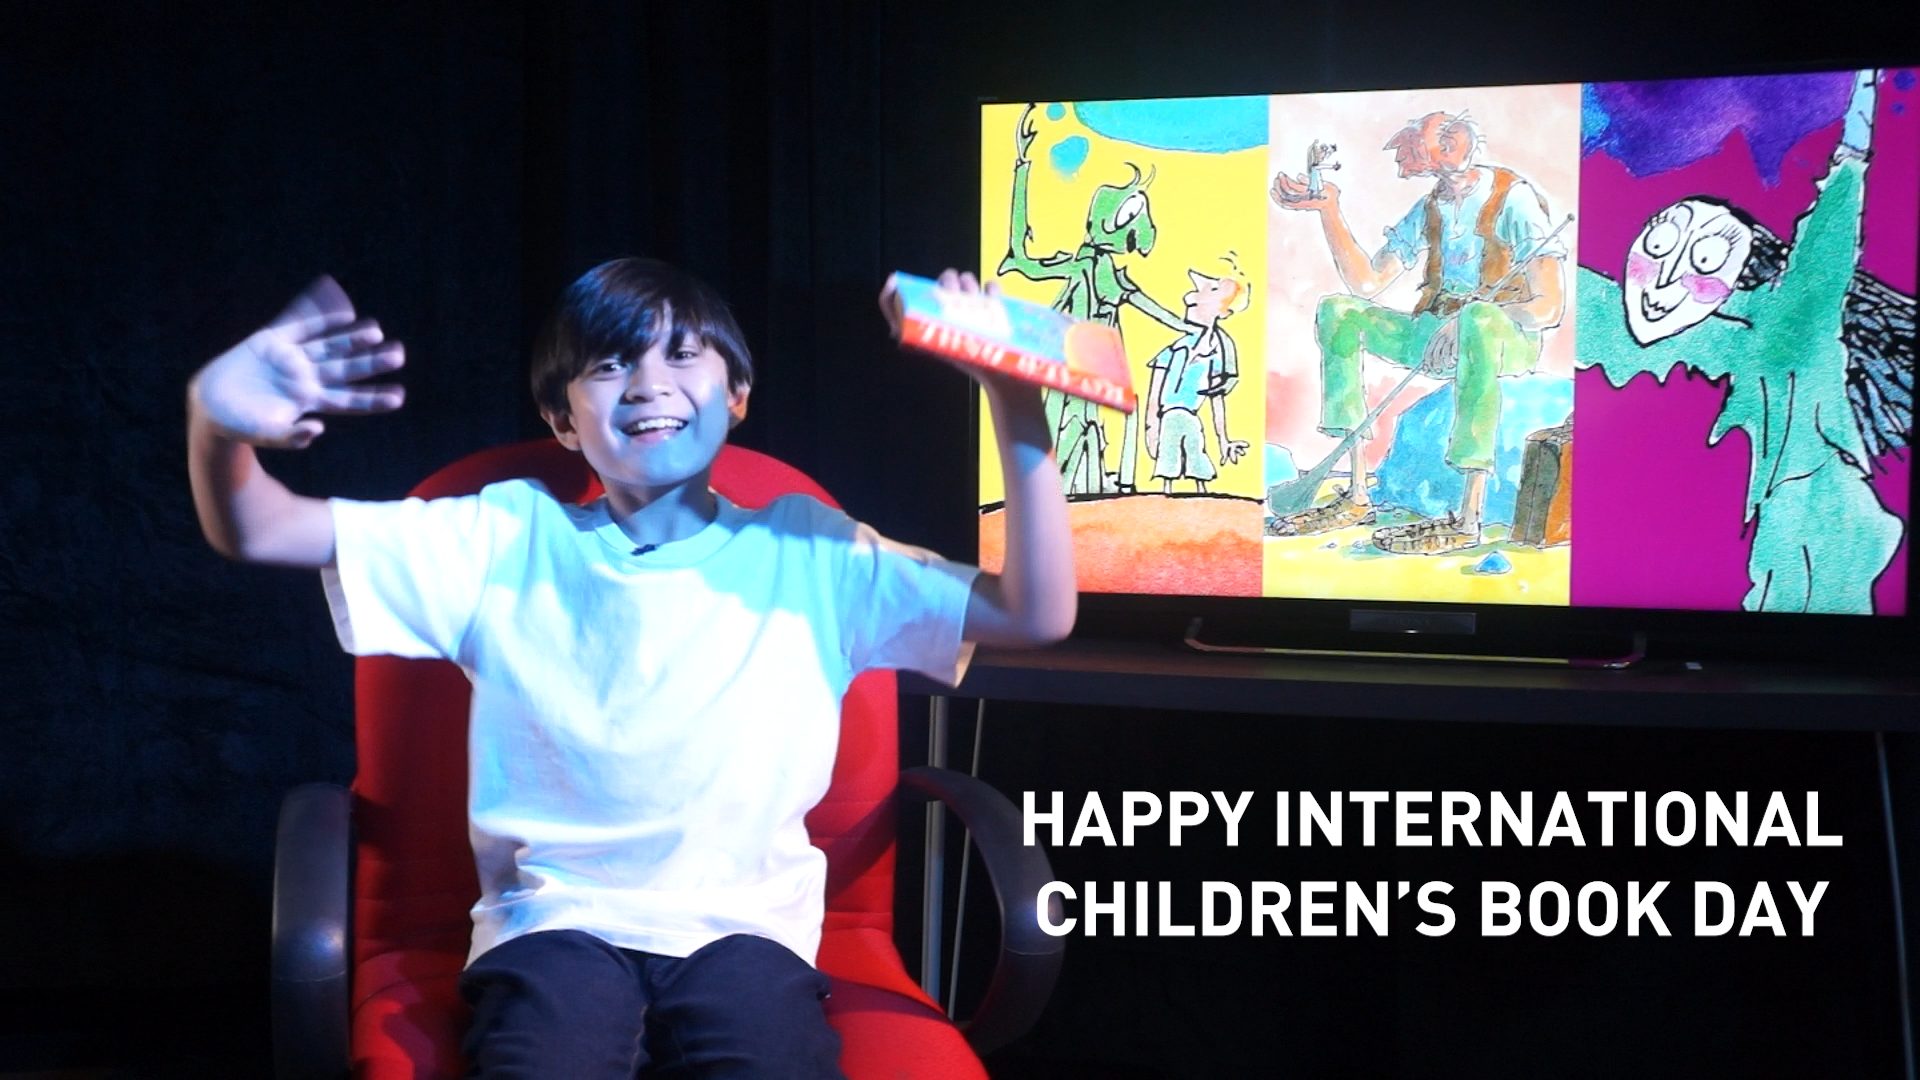 Gen wishing everyone Happy International Children's Book Day